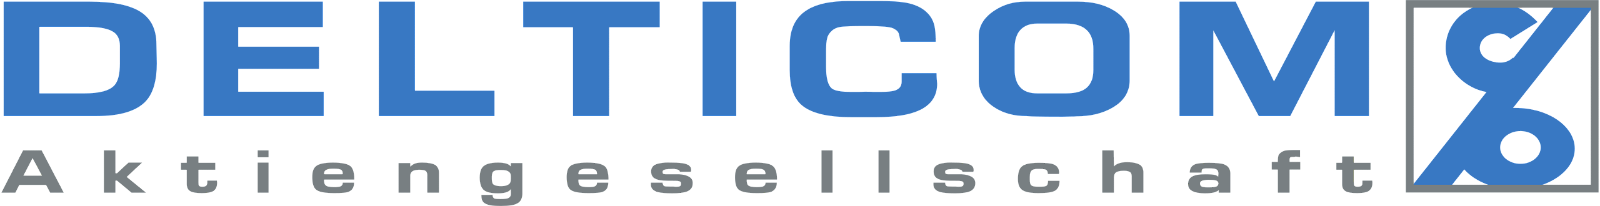 Delticom logo